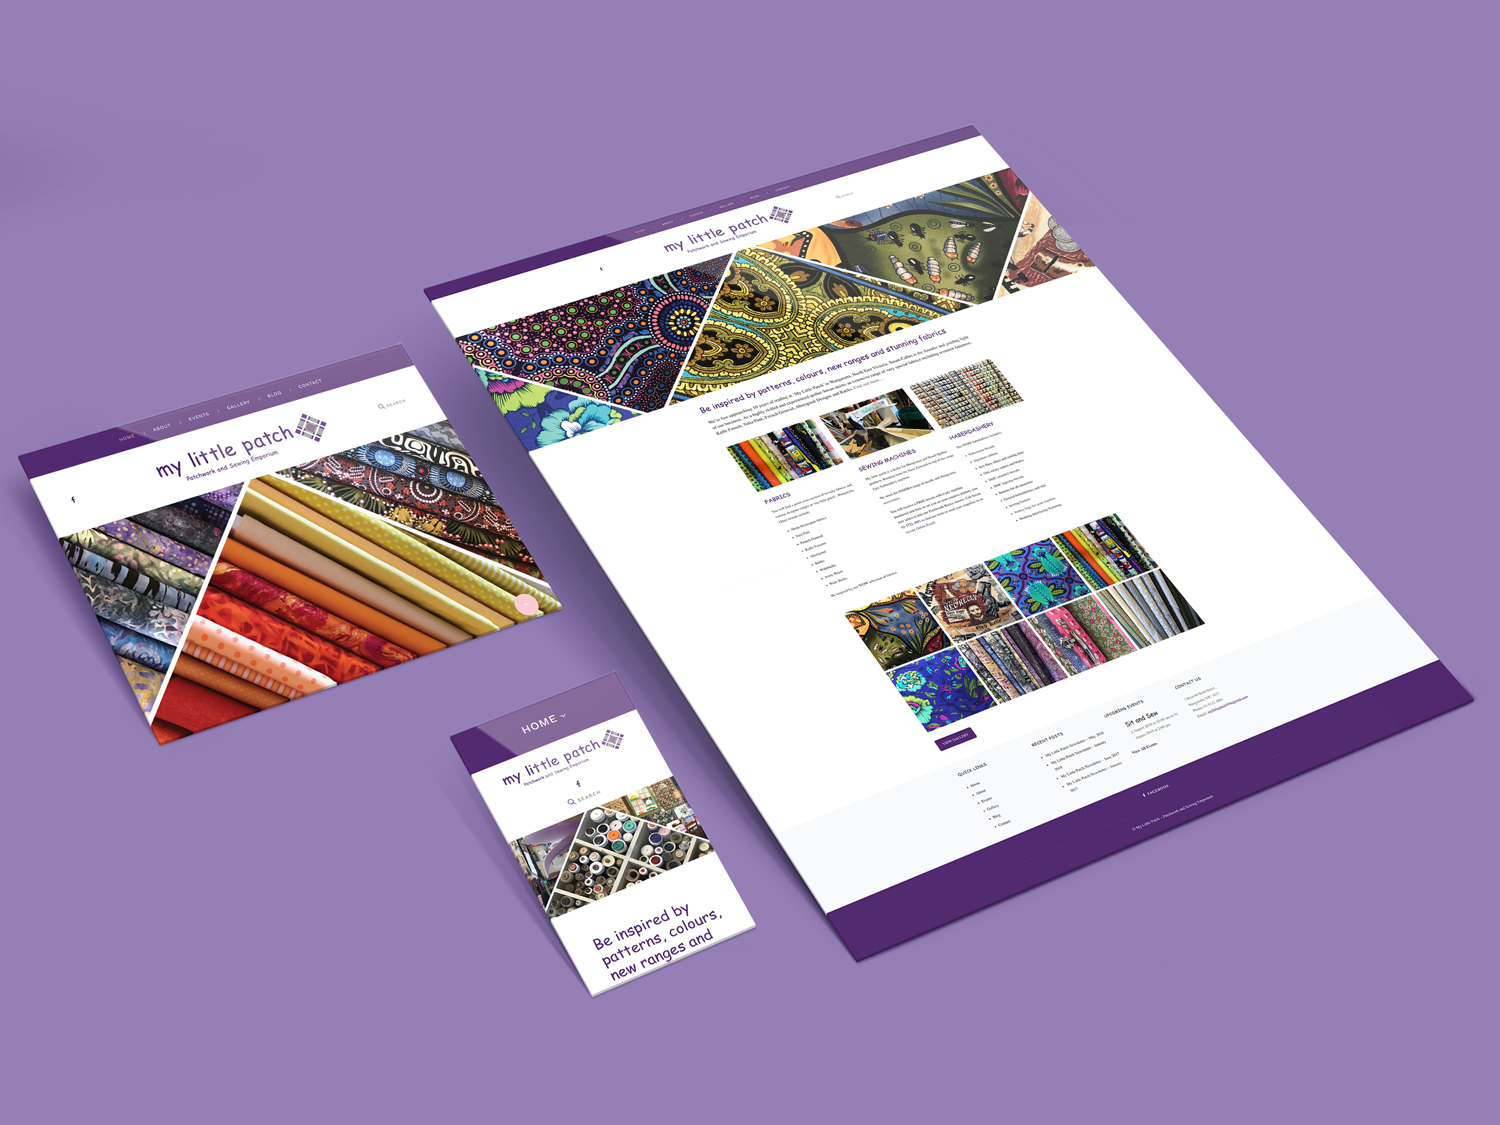 Purple Possum Design – Web Design Wangaratta – My Little Patch